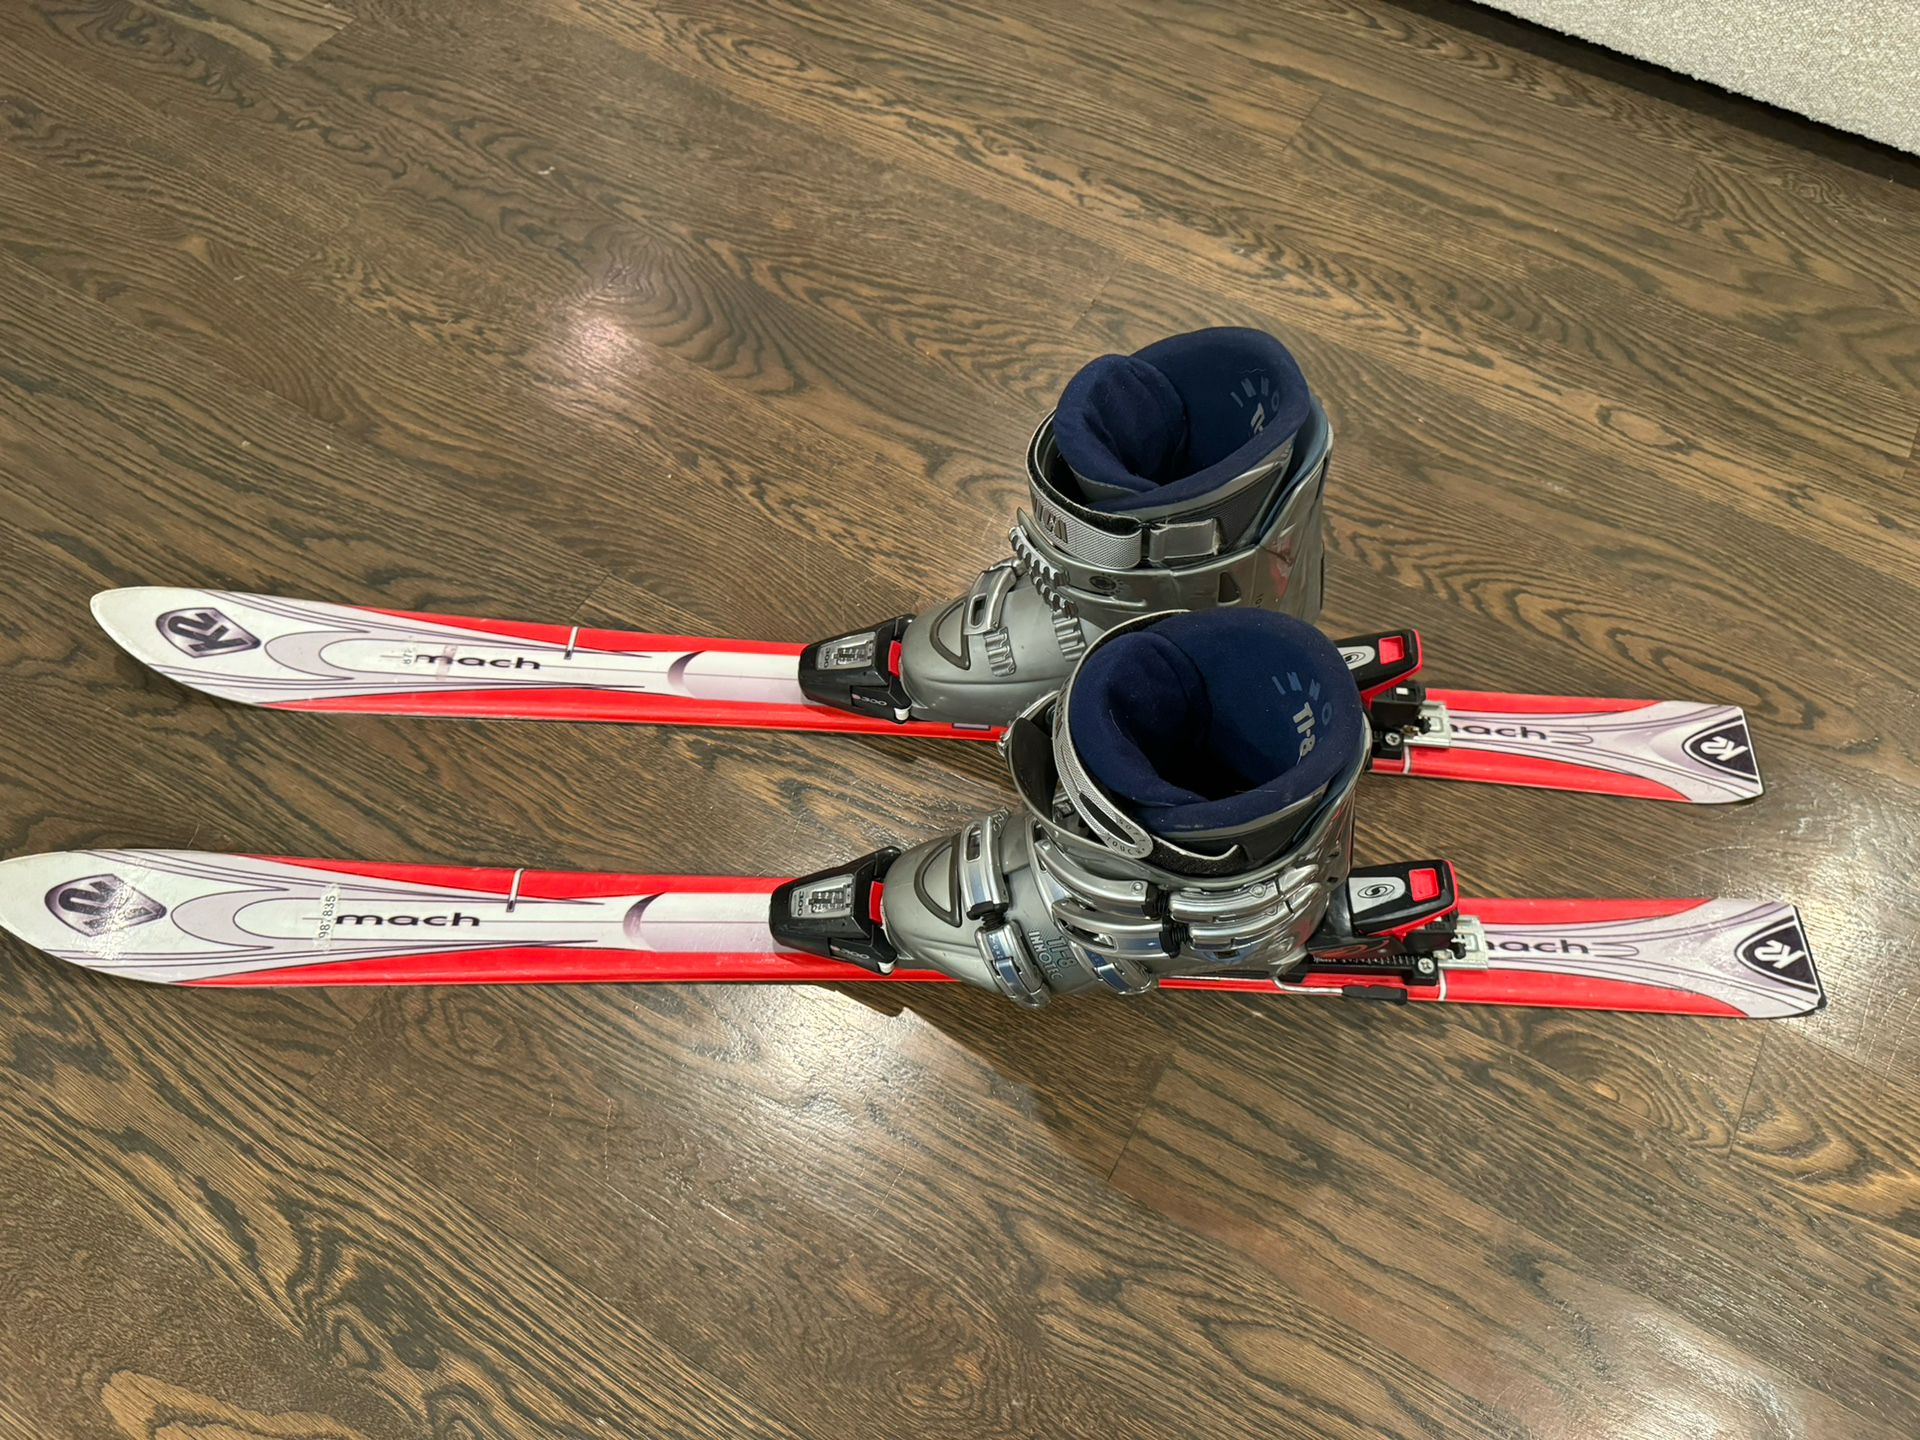 K2 Youth Skis & Tecnica Ski Boots